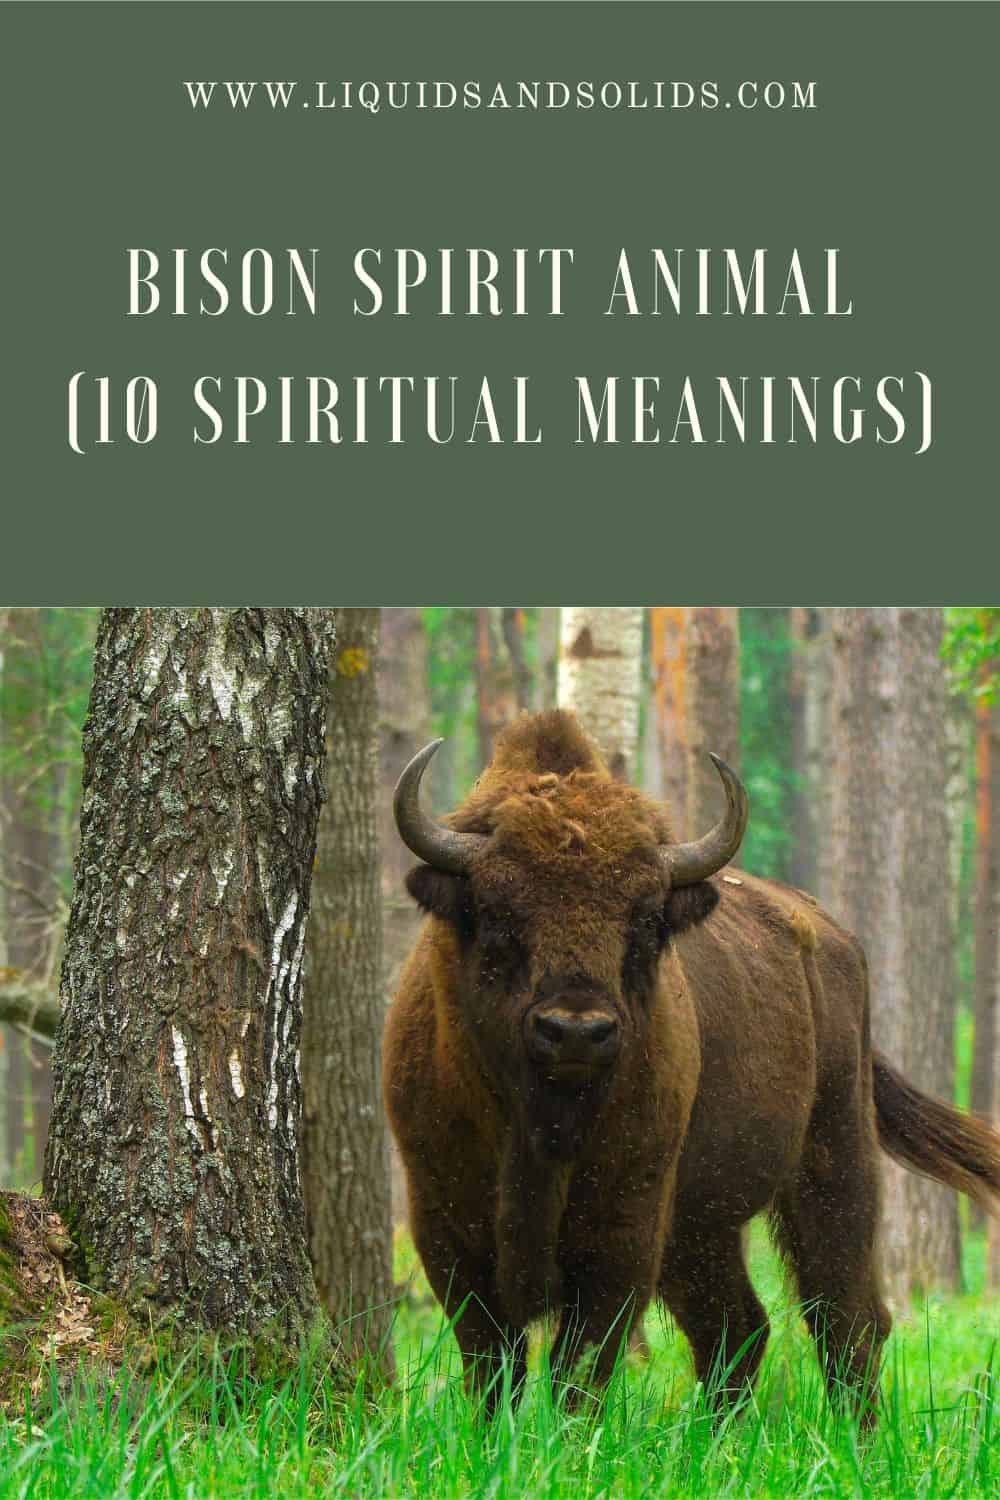  Animal spirituel du bison (10 significations spirituelles)